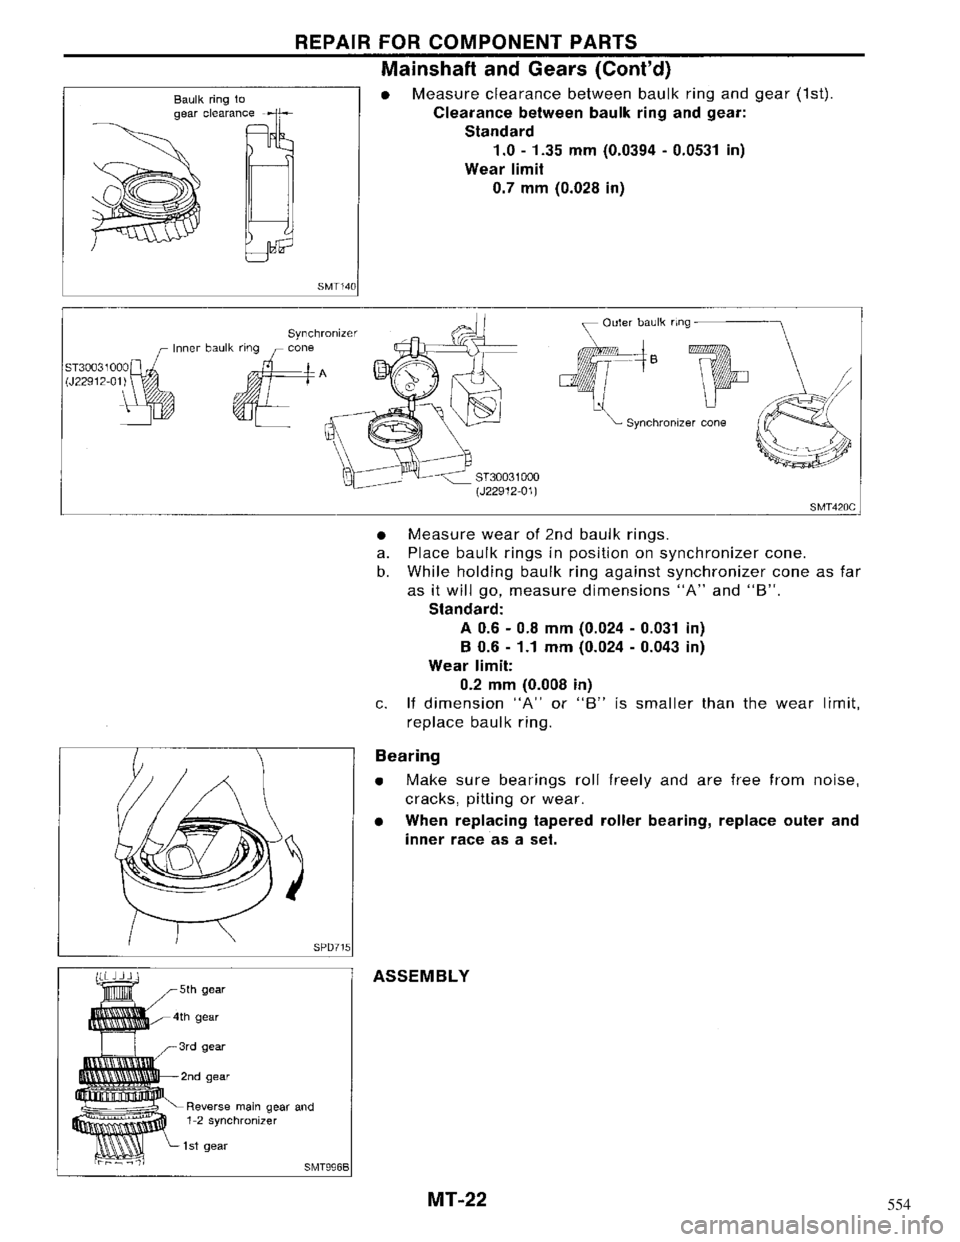 NISSAN MAXIMA 1994 A32 / 4.G Manual Transaxle Owners Manual 554 